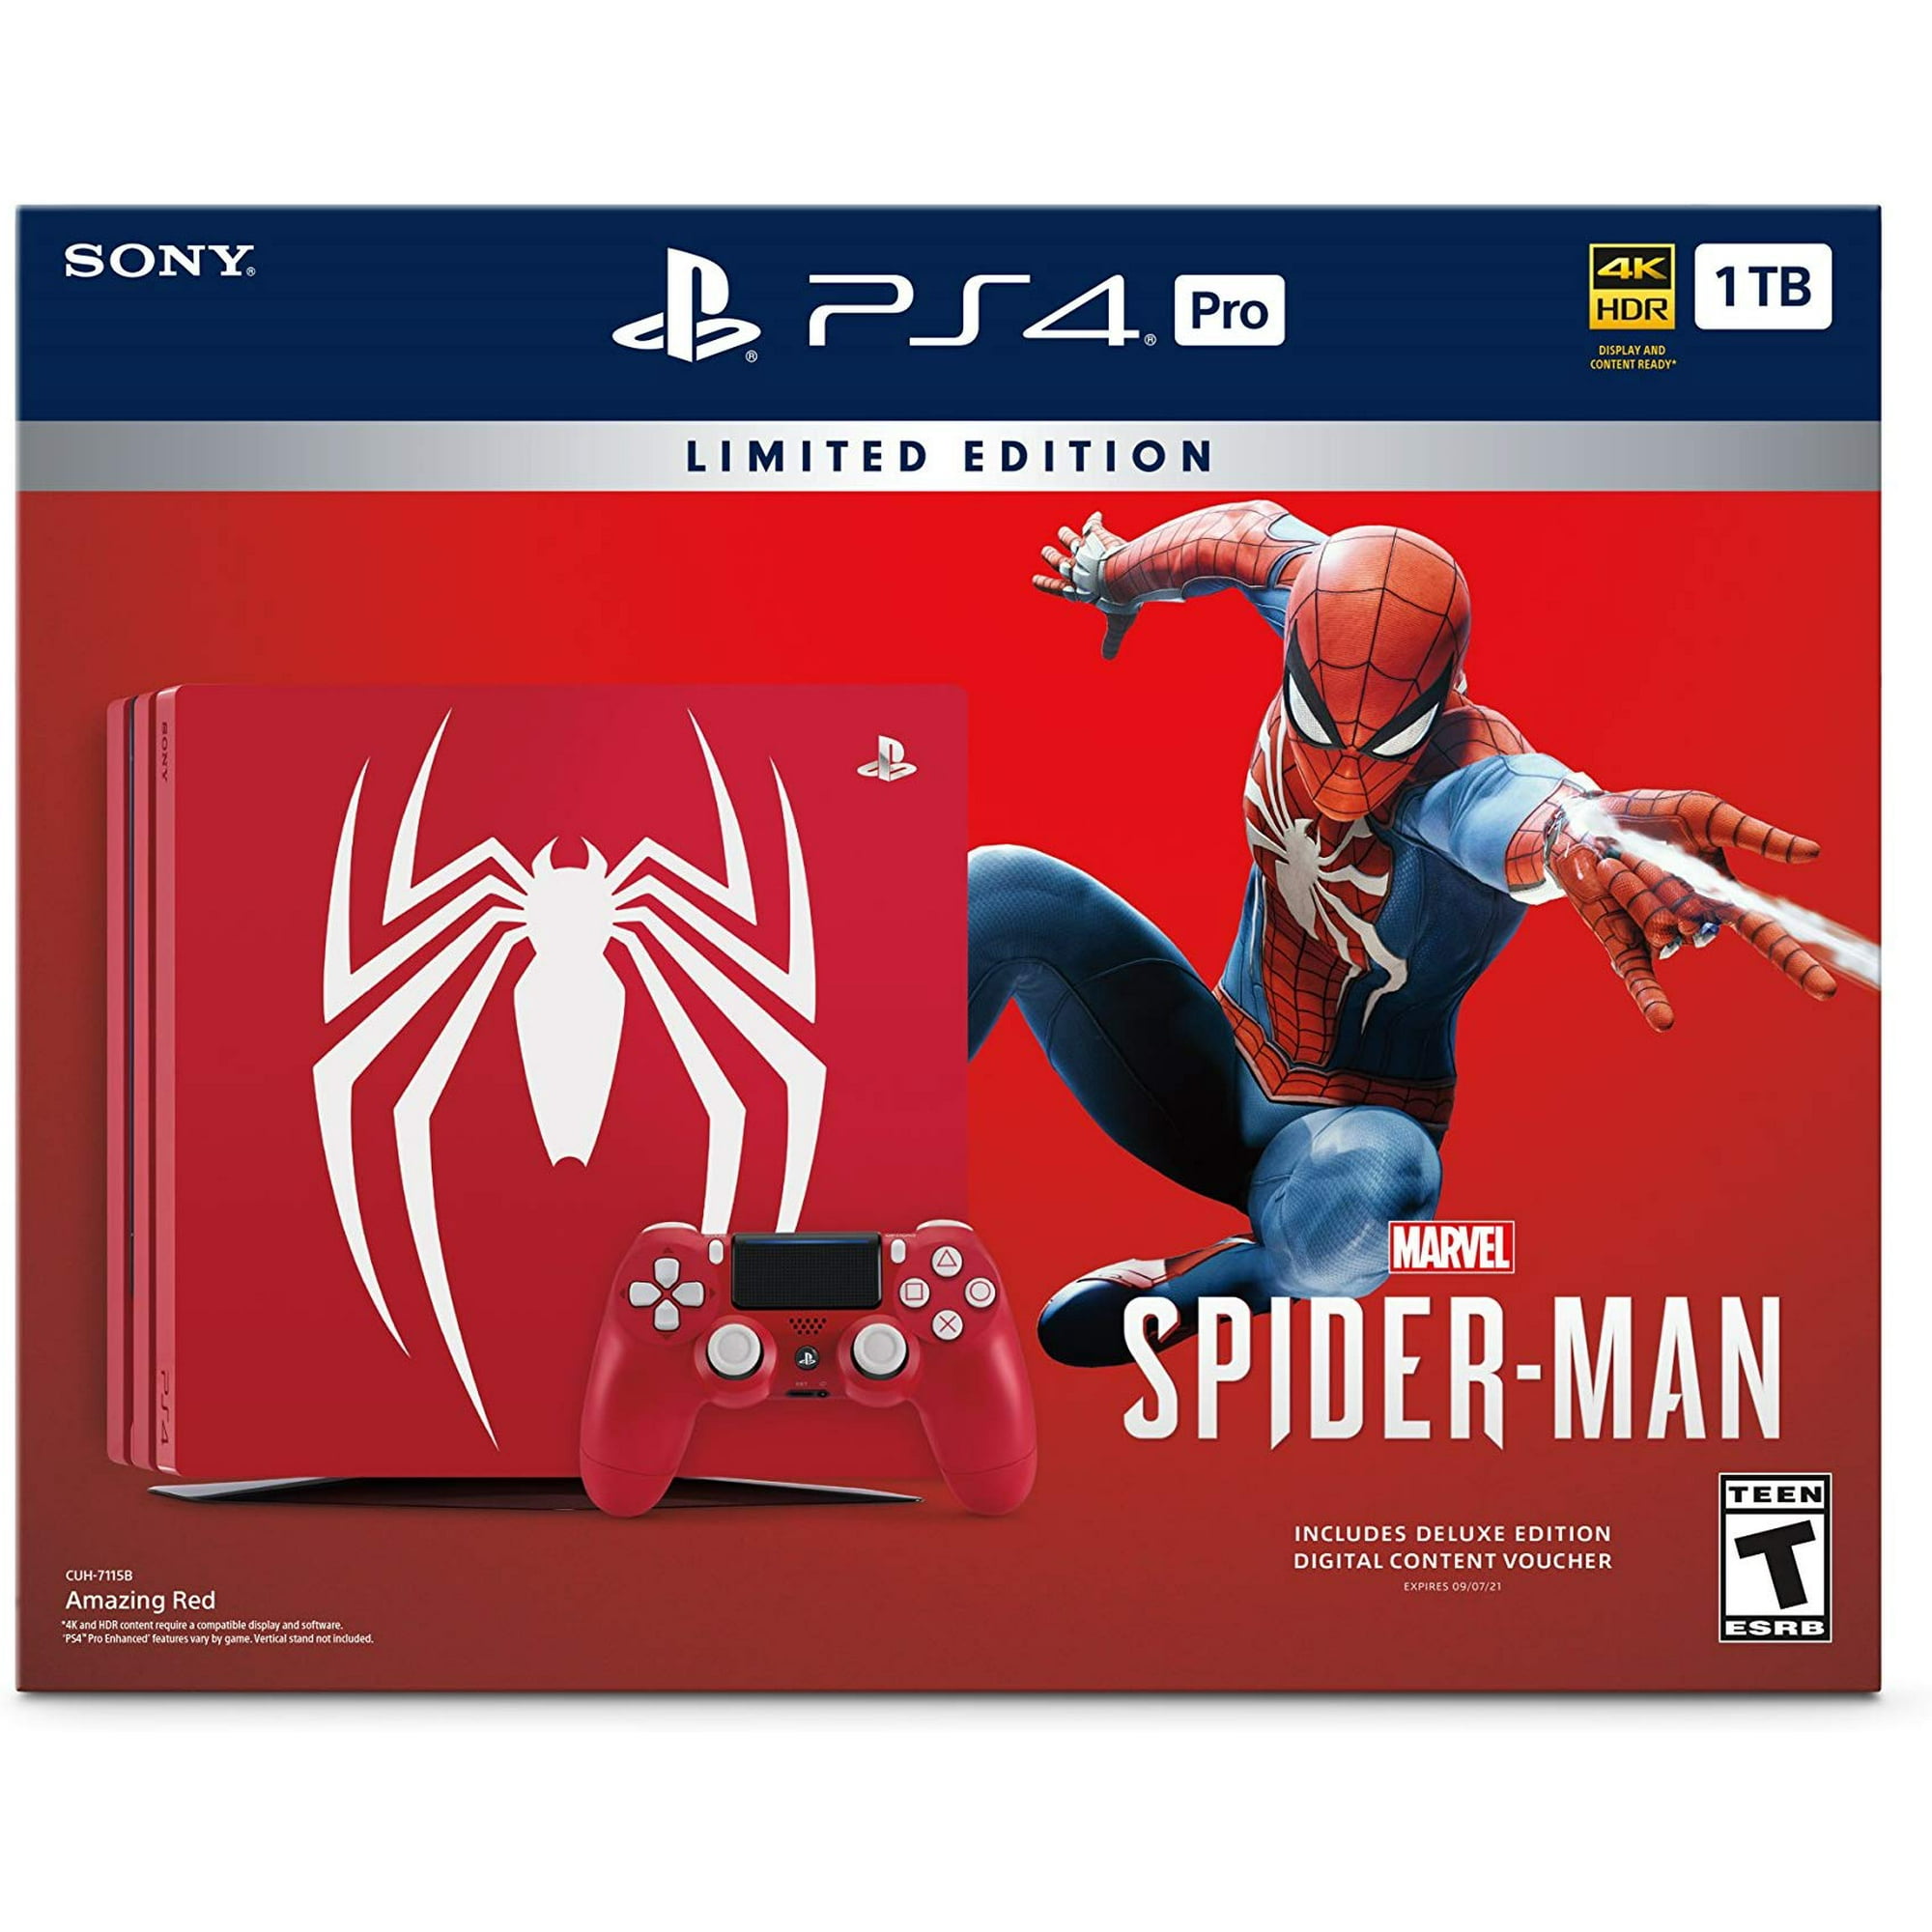 Amazing red магазин каталог. Игровая приставка Sony PLAYSTATION 4 Pro Spider-man. Sony PLAYSTATION 4 Pro Limited Edition Spider man. Ps4 Spider man приставка. Sony ps4 Pro Spider man.